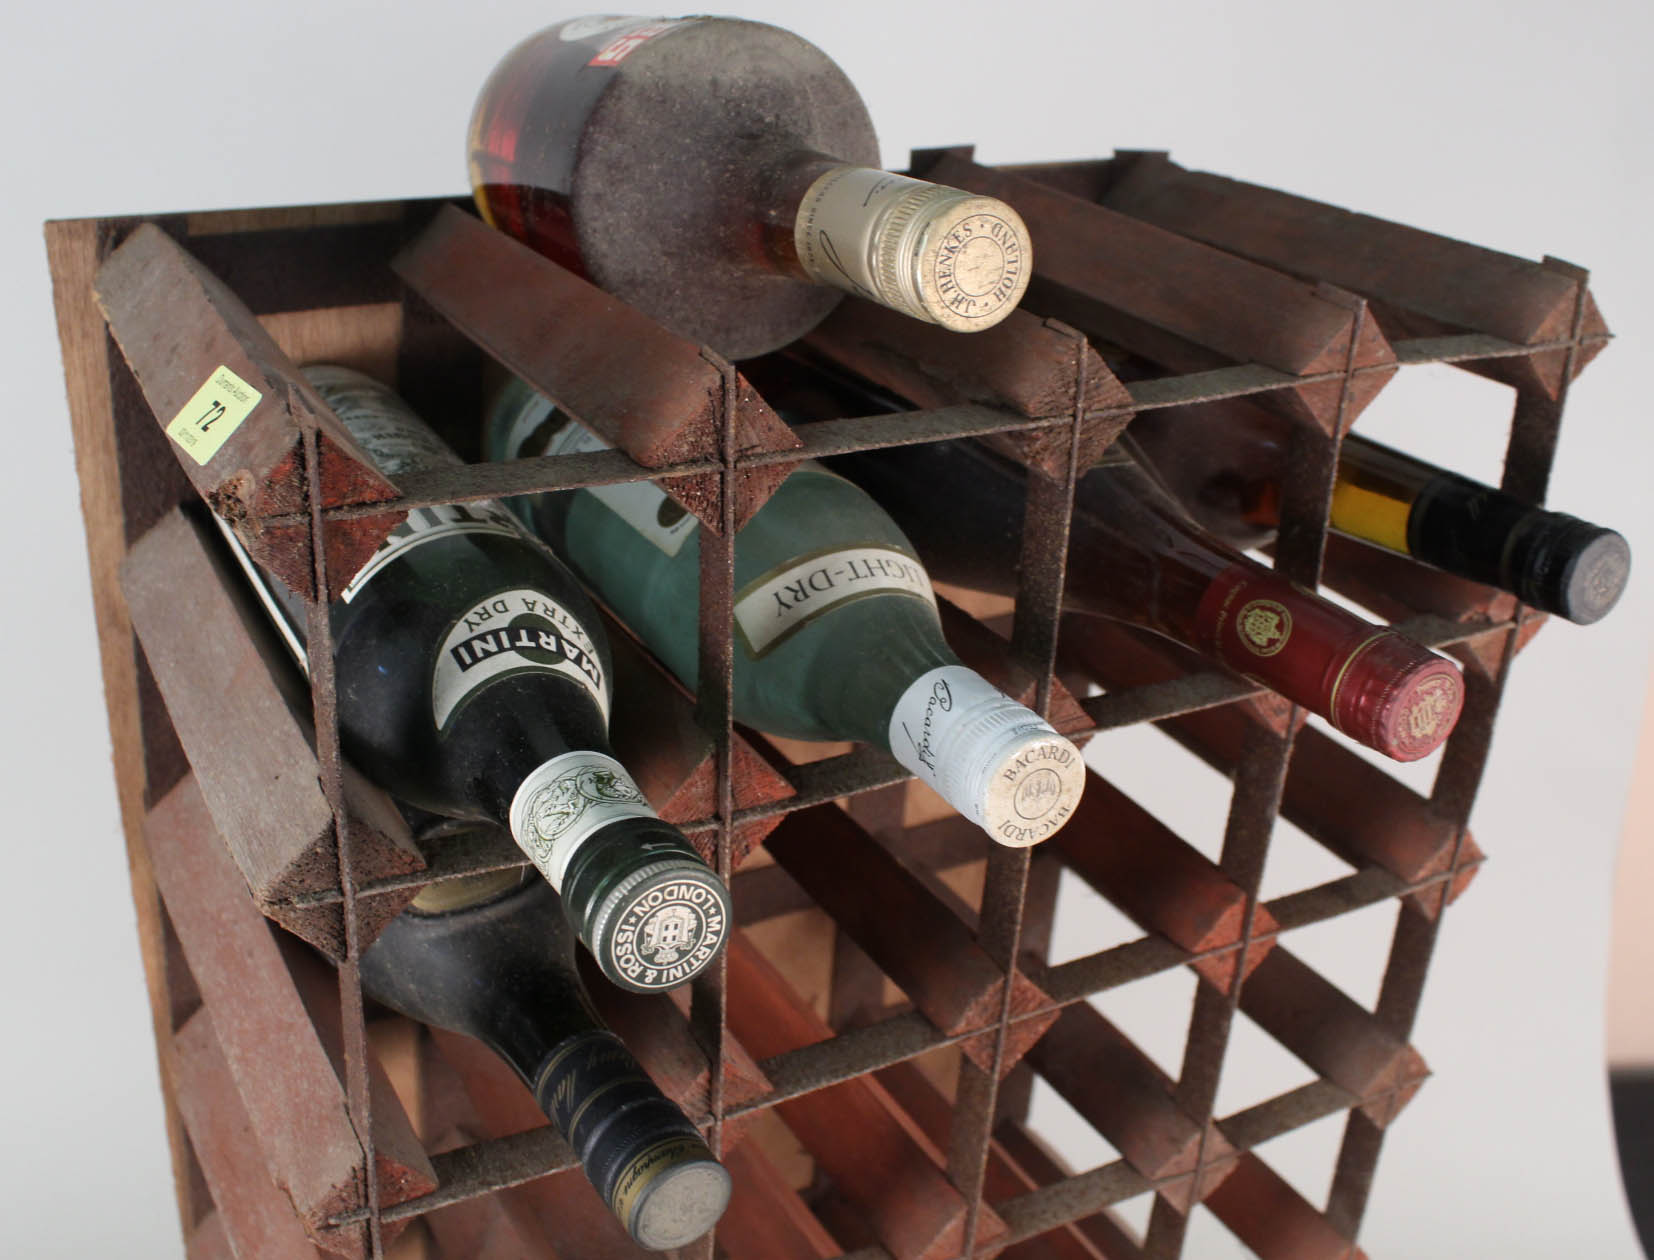 Six bottles, Henikes apricot brandy, Prince Hubert De Polignac cognac, dry Martini, Bacardi, - Image 2 of 2